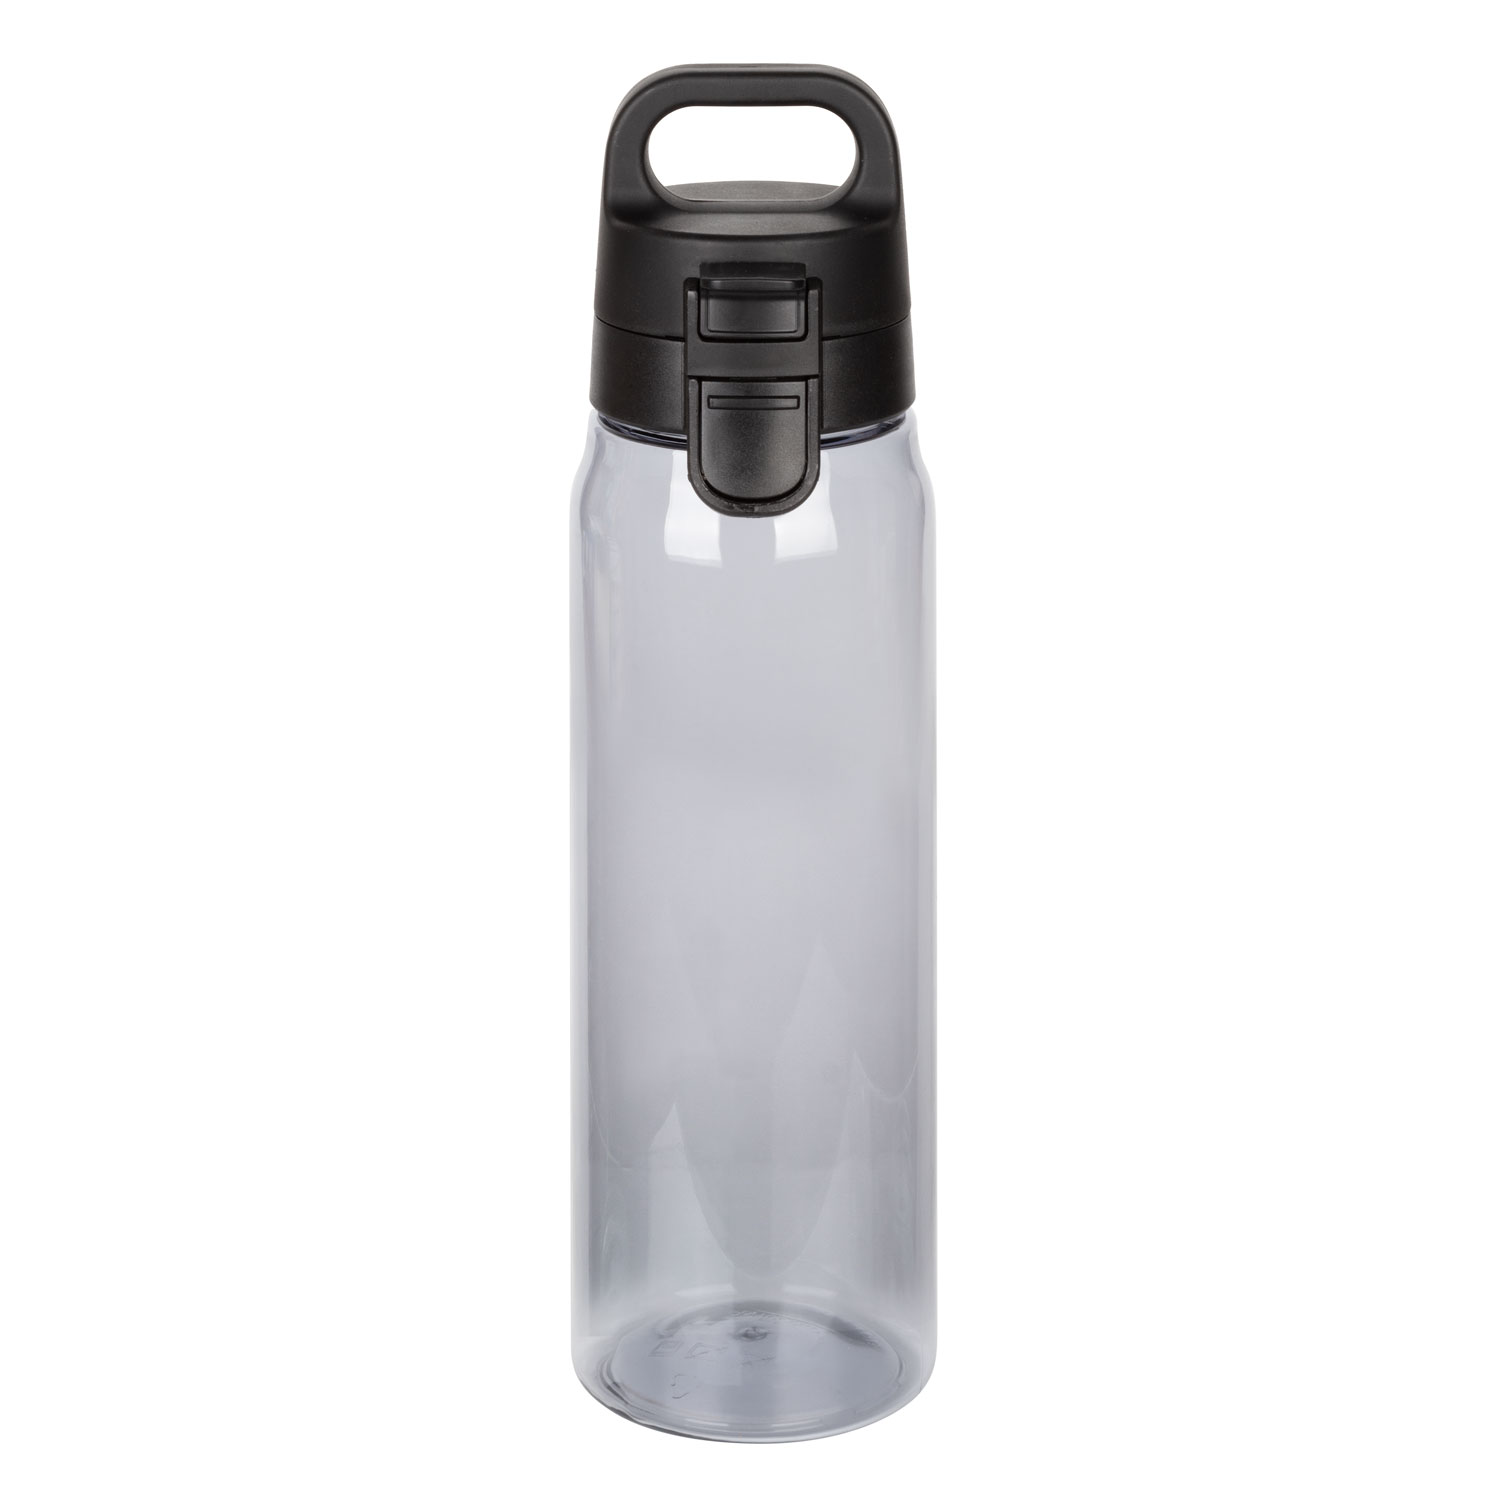 Артикул: A201713.010 — Спортивная бутылка для воды, Aqua, 830 ml, черная